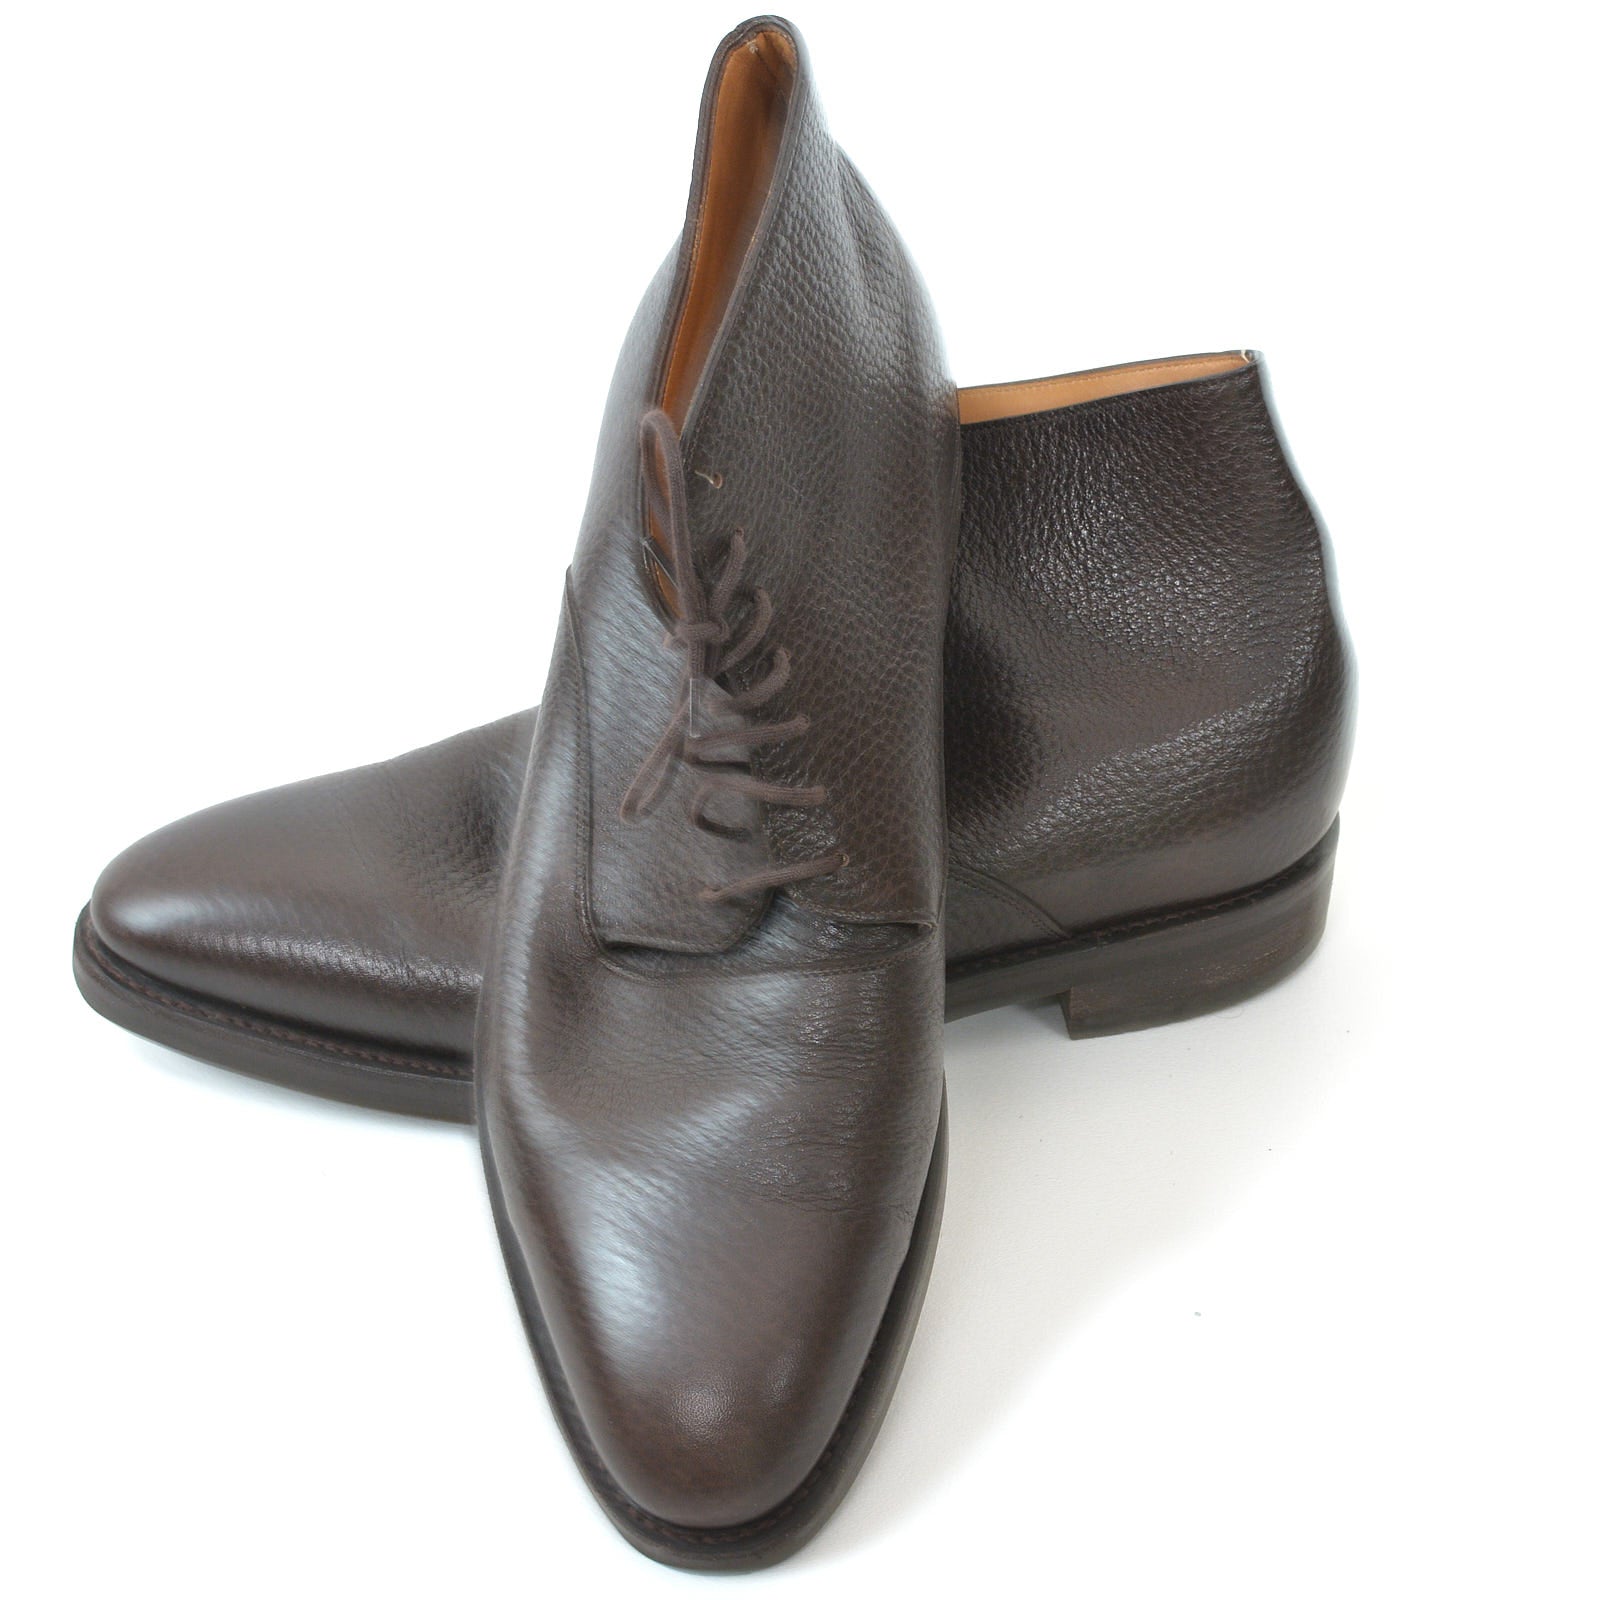 JOHN LOBB "Fern" Brown Grain Calf Leather Derby Boots Shoes UK 8.5E US 9.5 Last 7000 JOHN LOBB